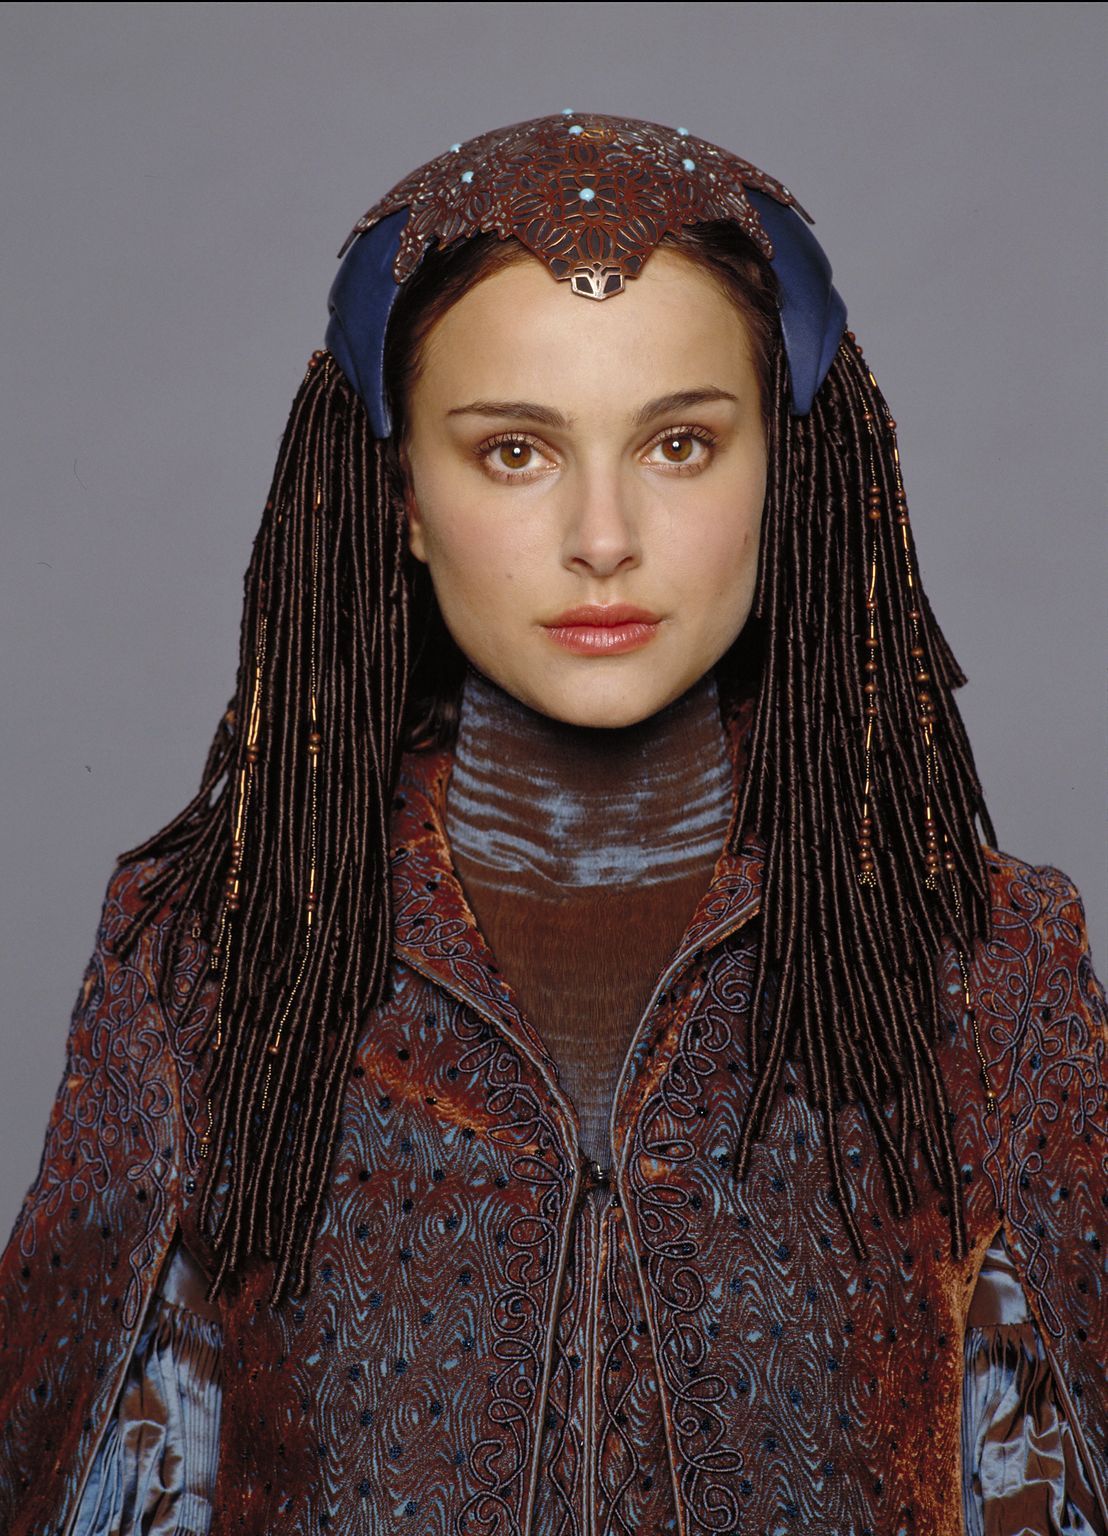 Natalie Portman in Zvaigzdziu karai. Situ kerstas (2005)